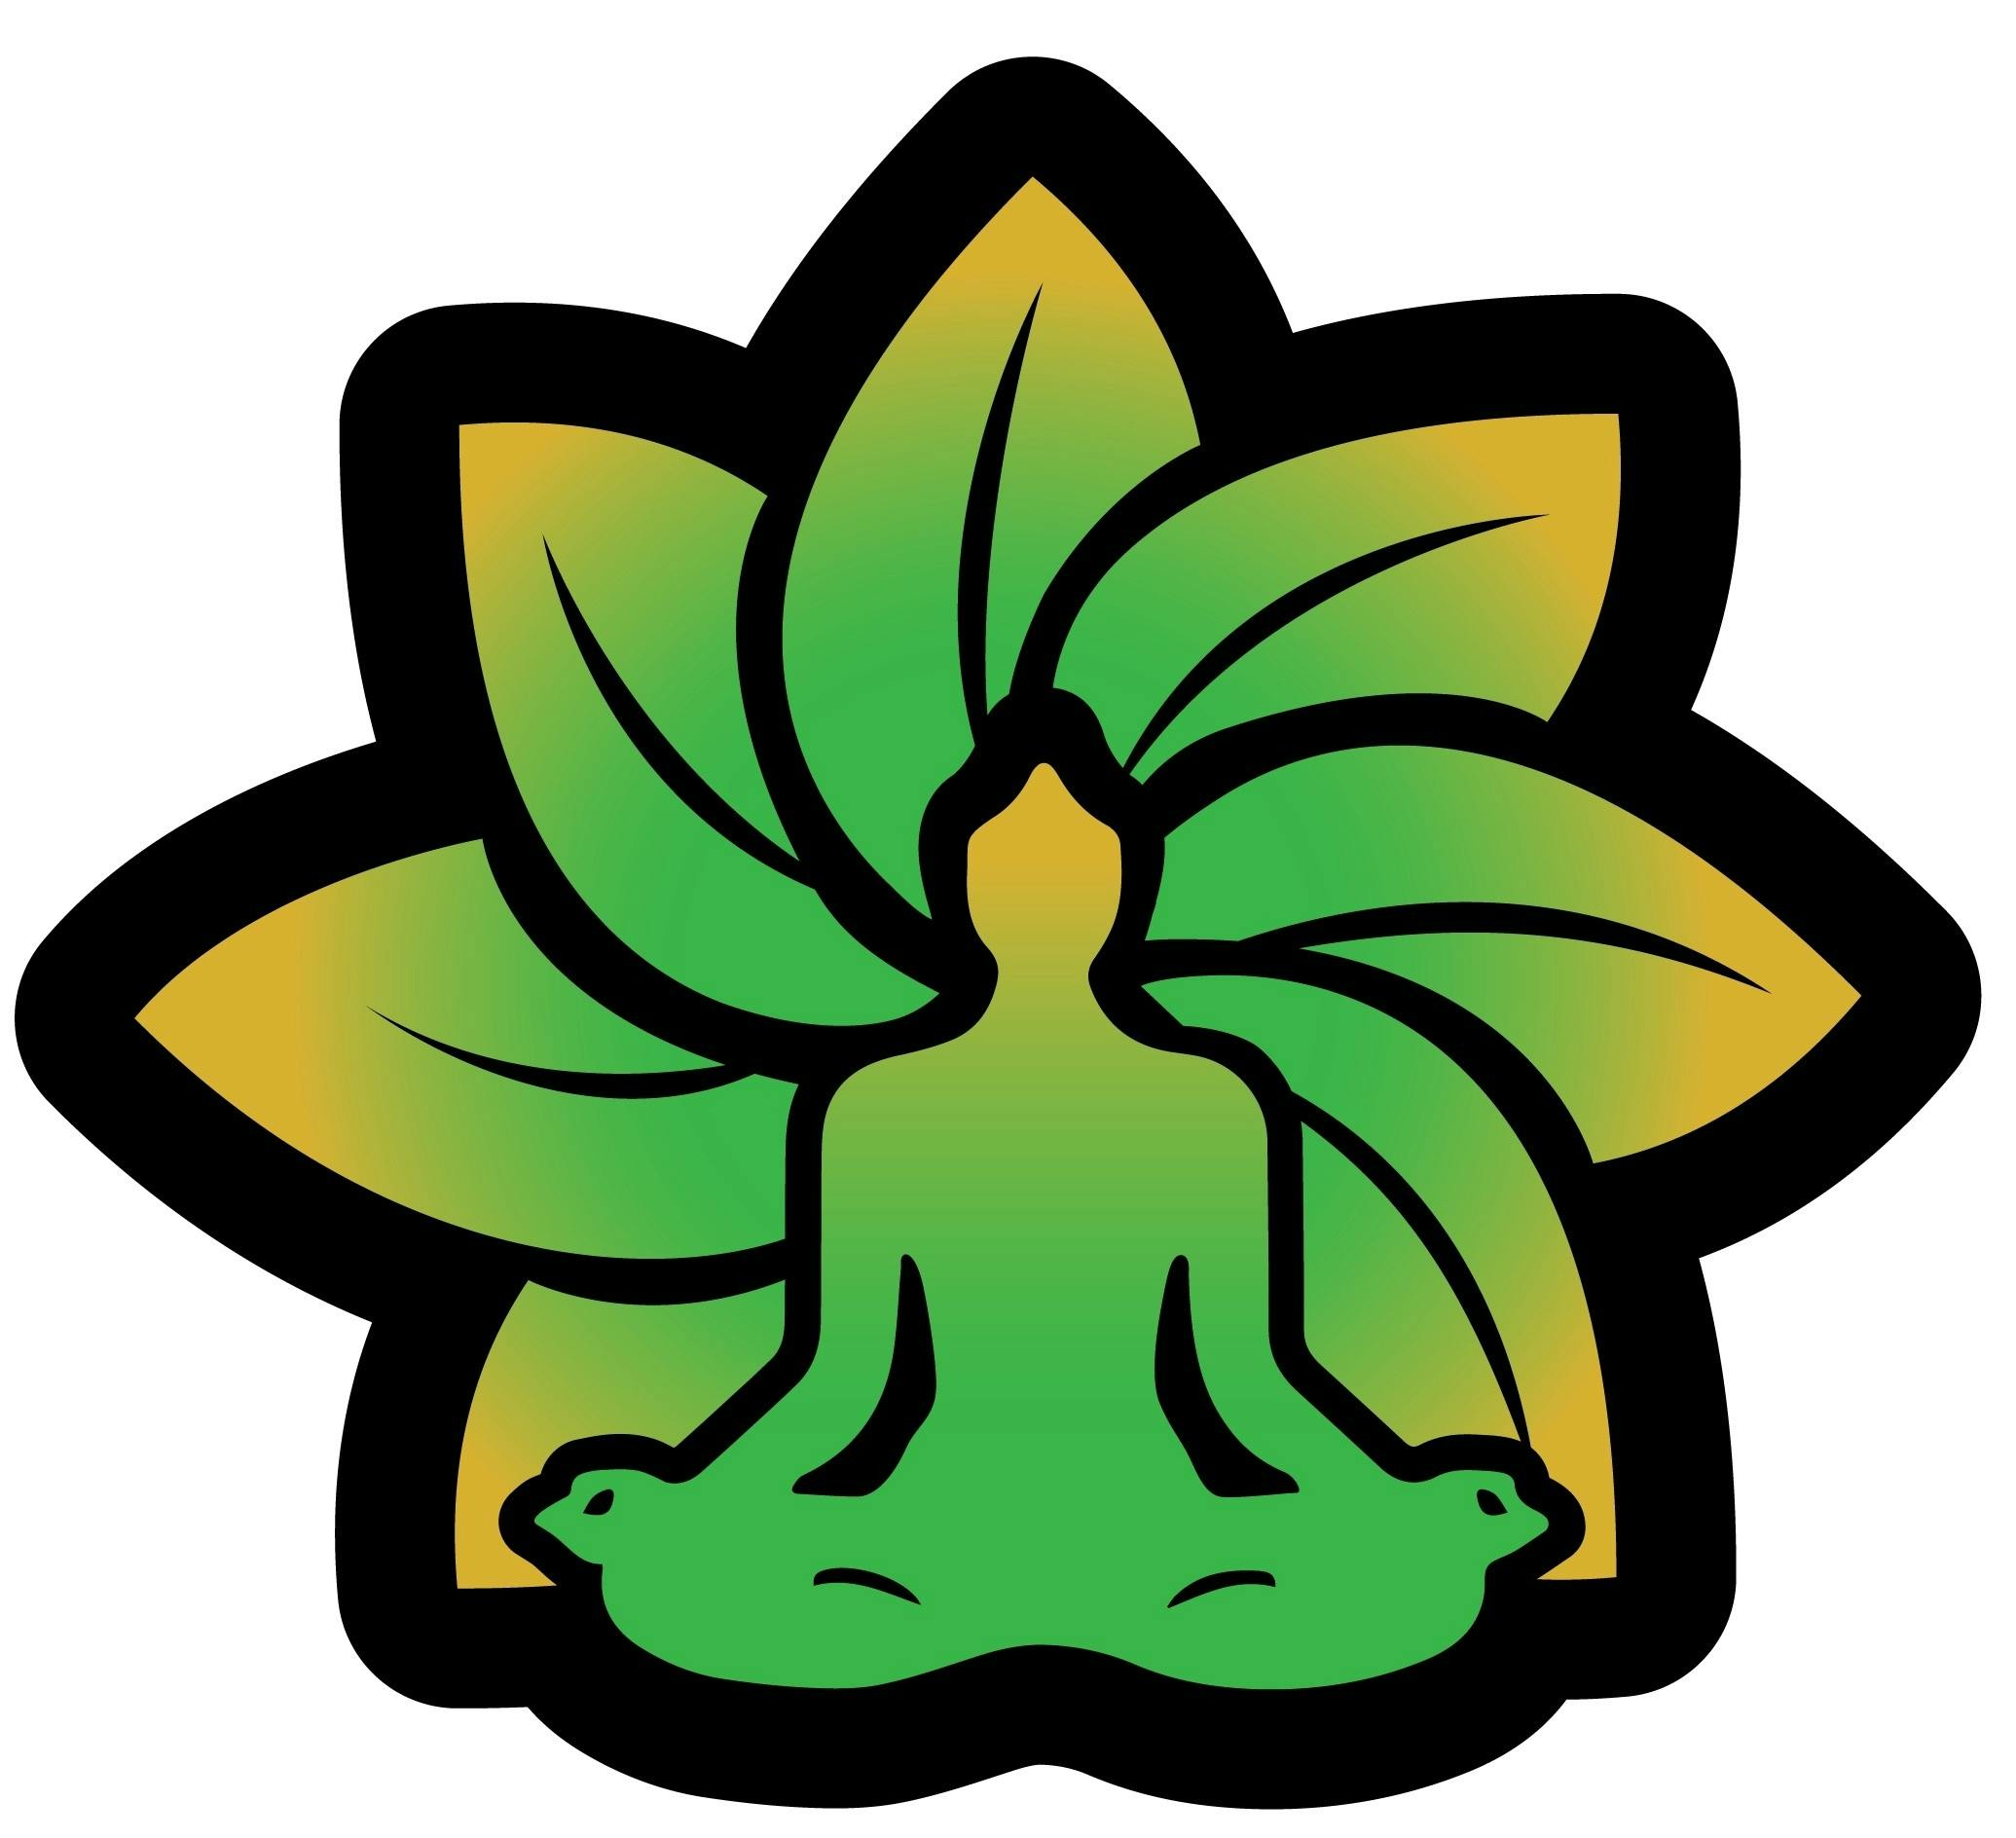 Kush Vibez Medical Cannabis dispensary logo